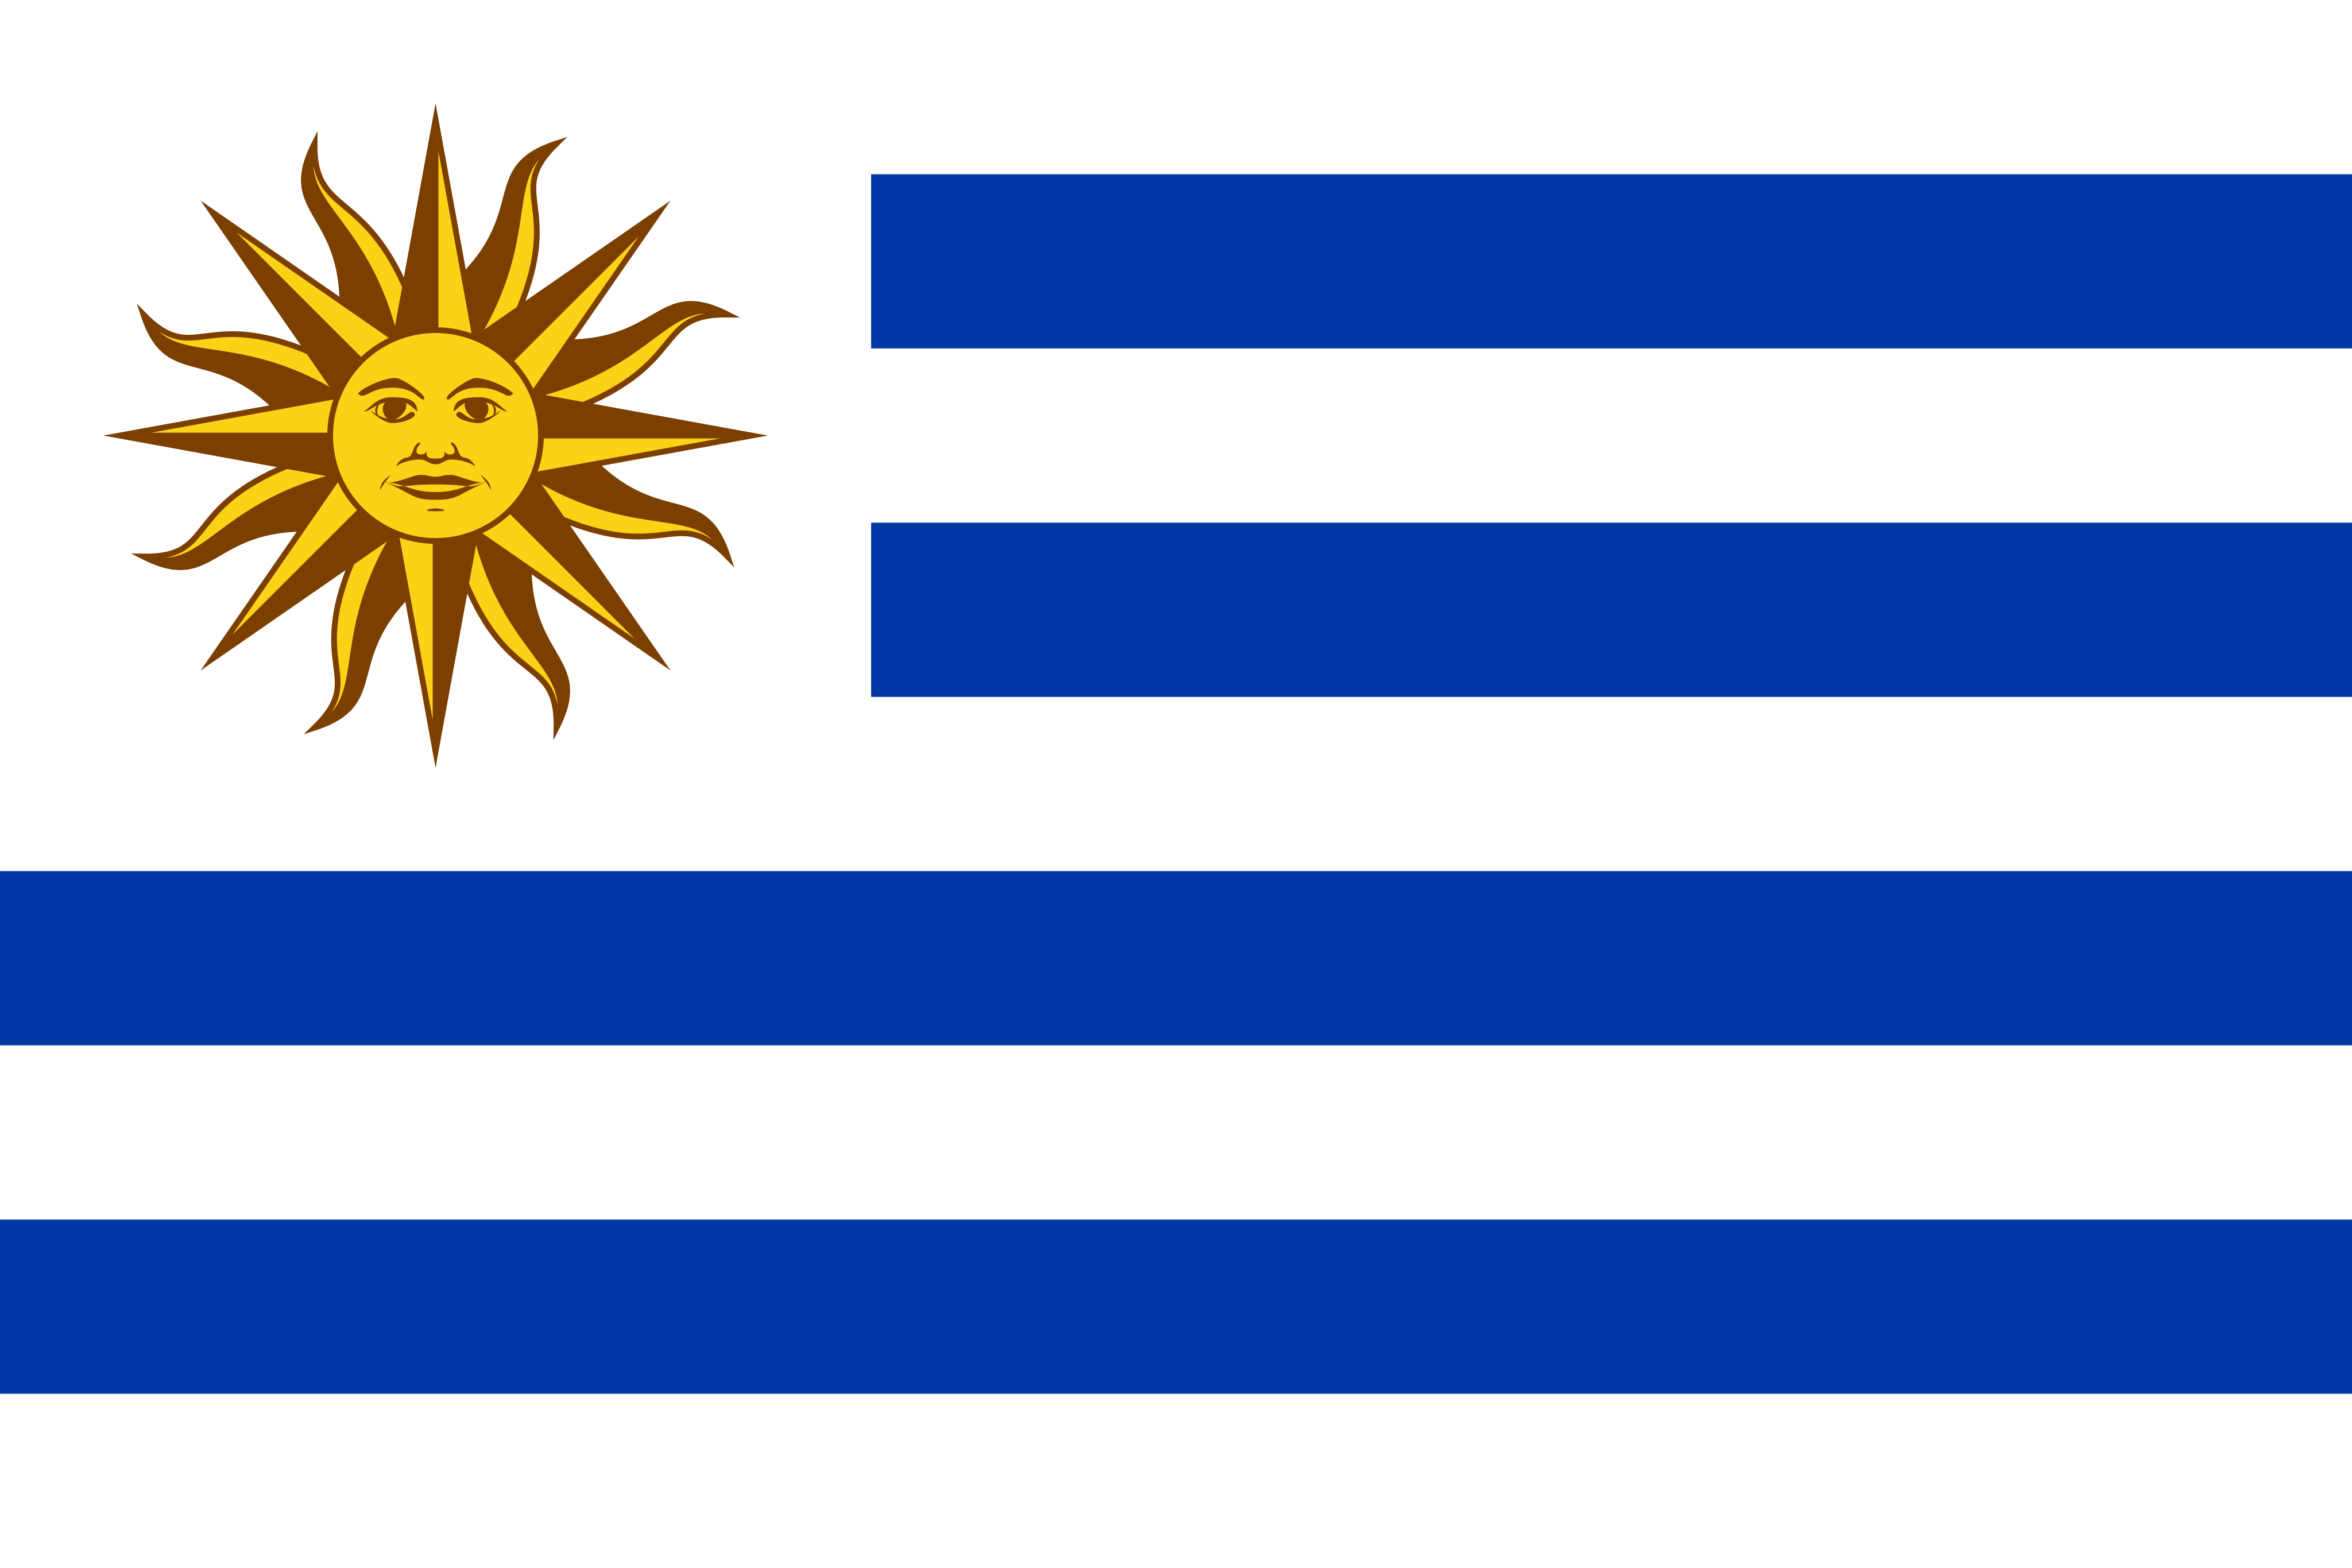 bandeira uruguay flag - Flag of Uruguay